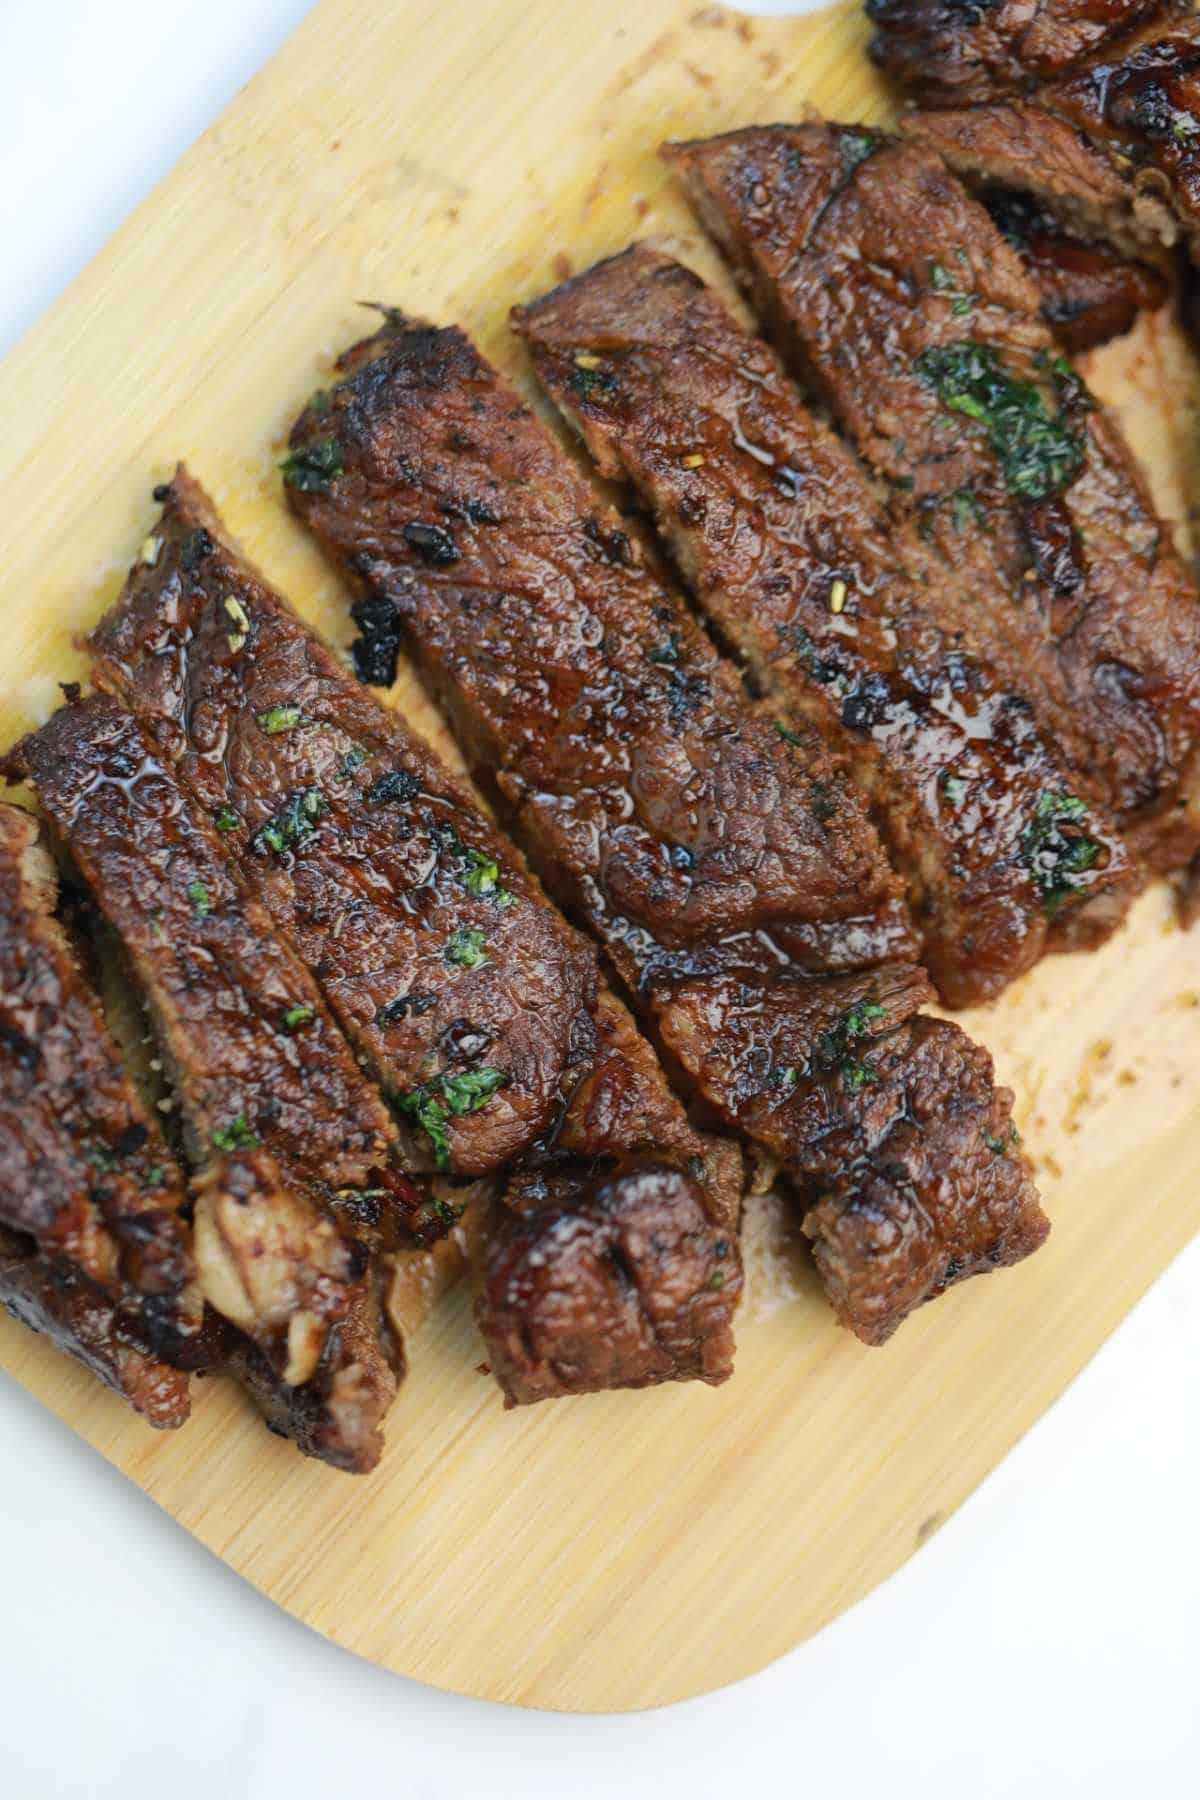 cooked sirloin steak cut on a serving board.